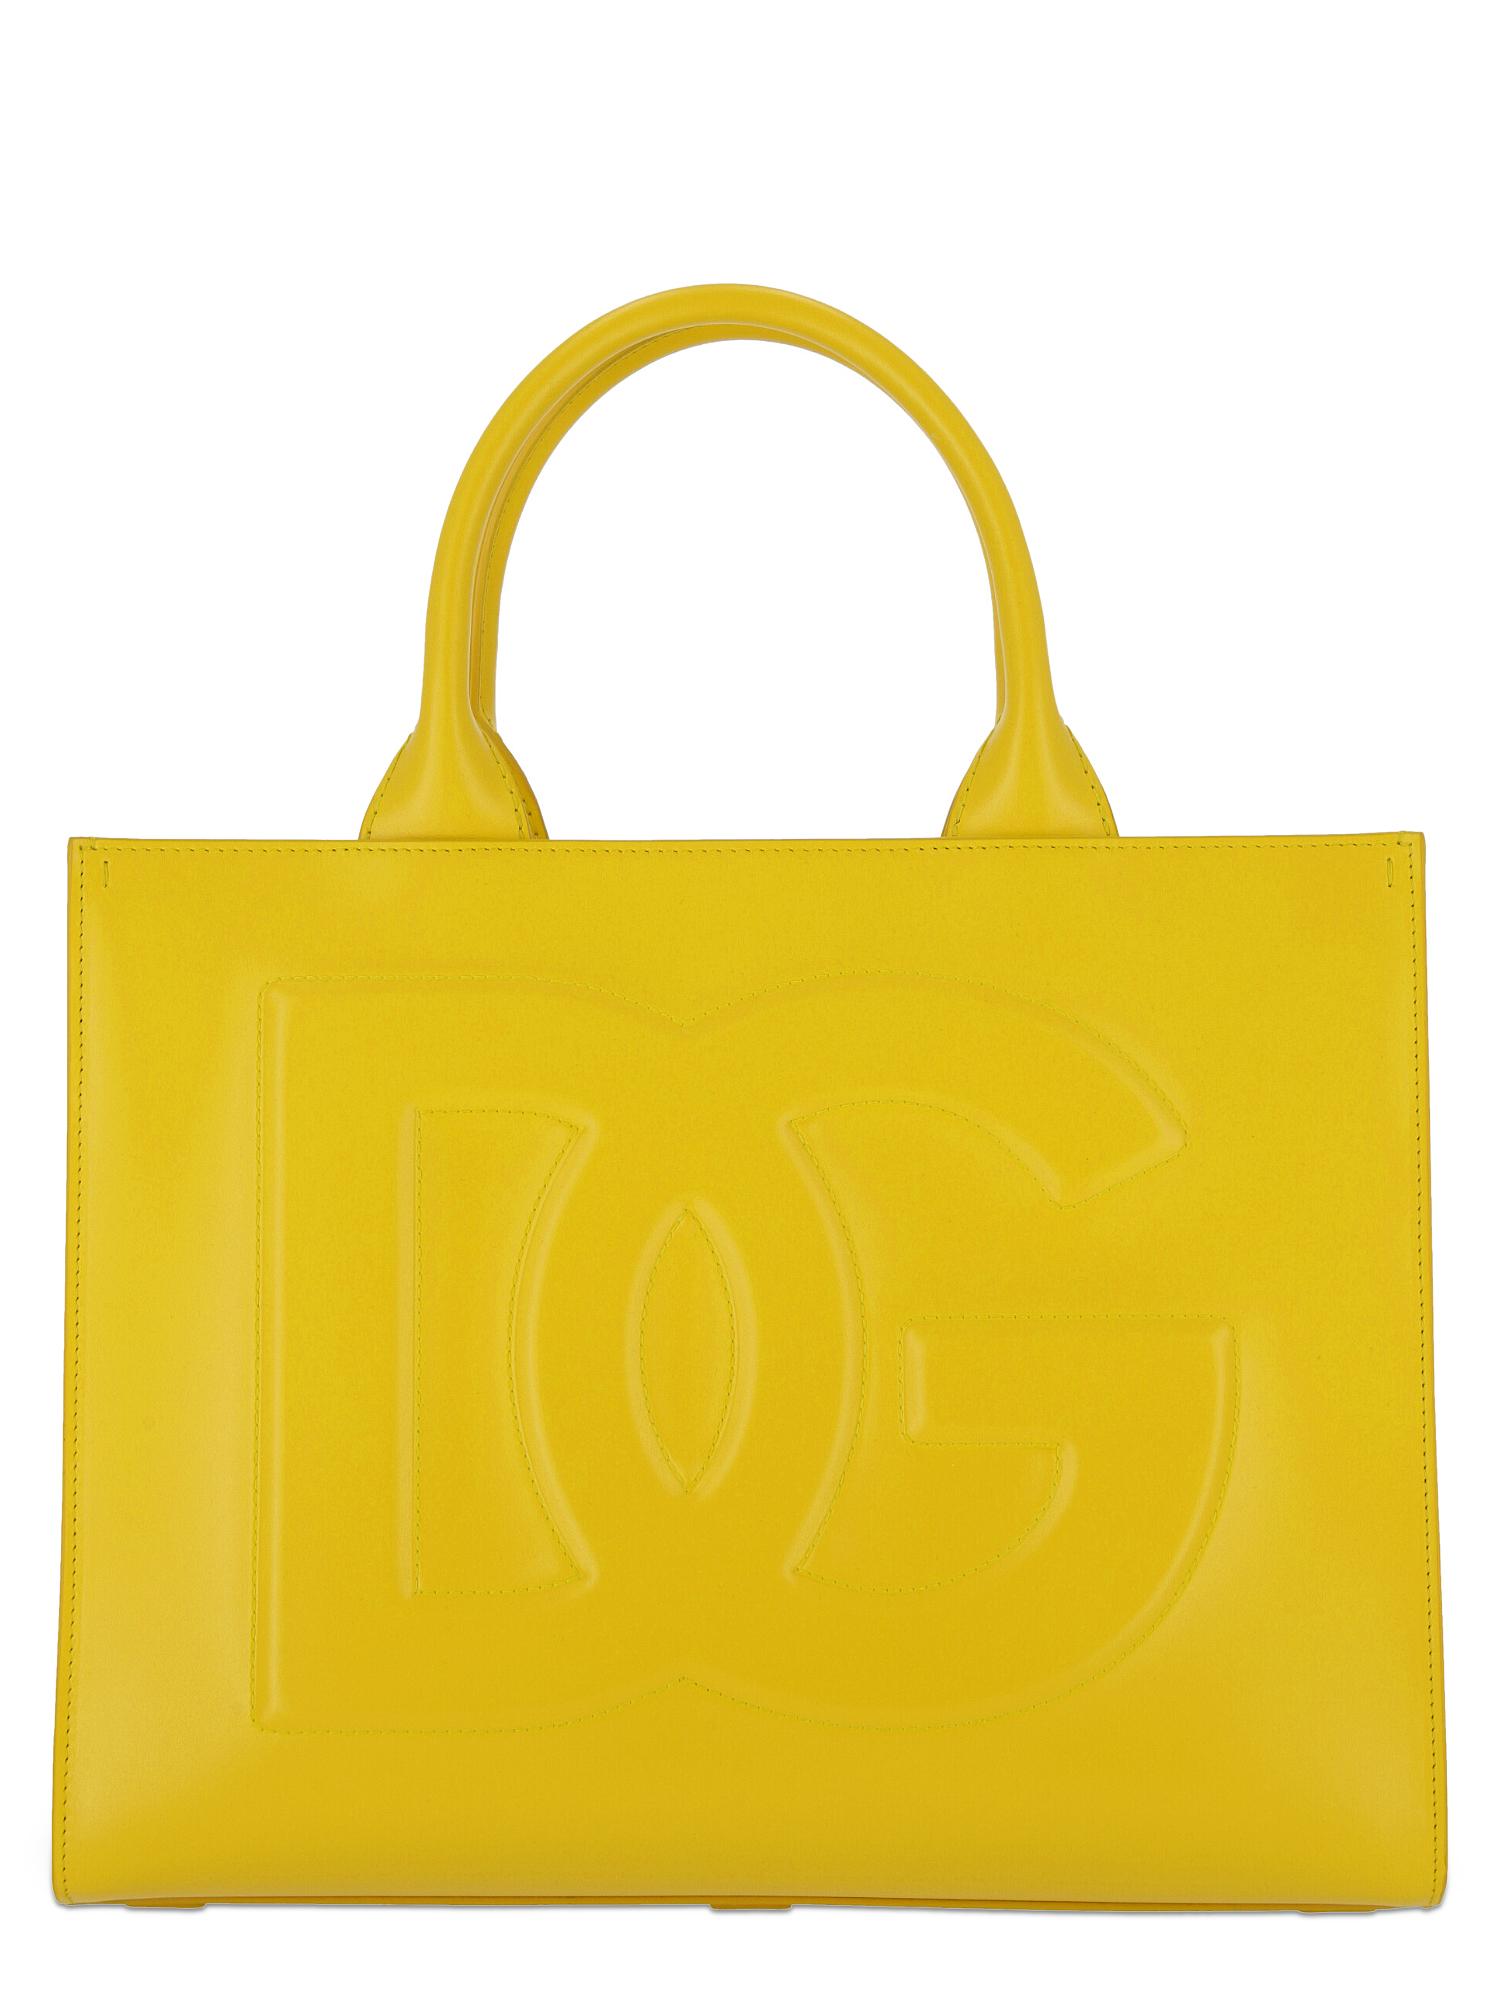 Dolce & Gabbana Shoulder Bag in Yellow